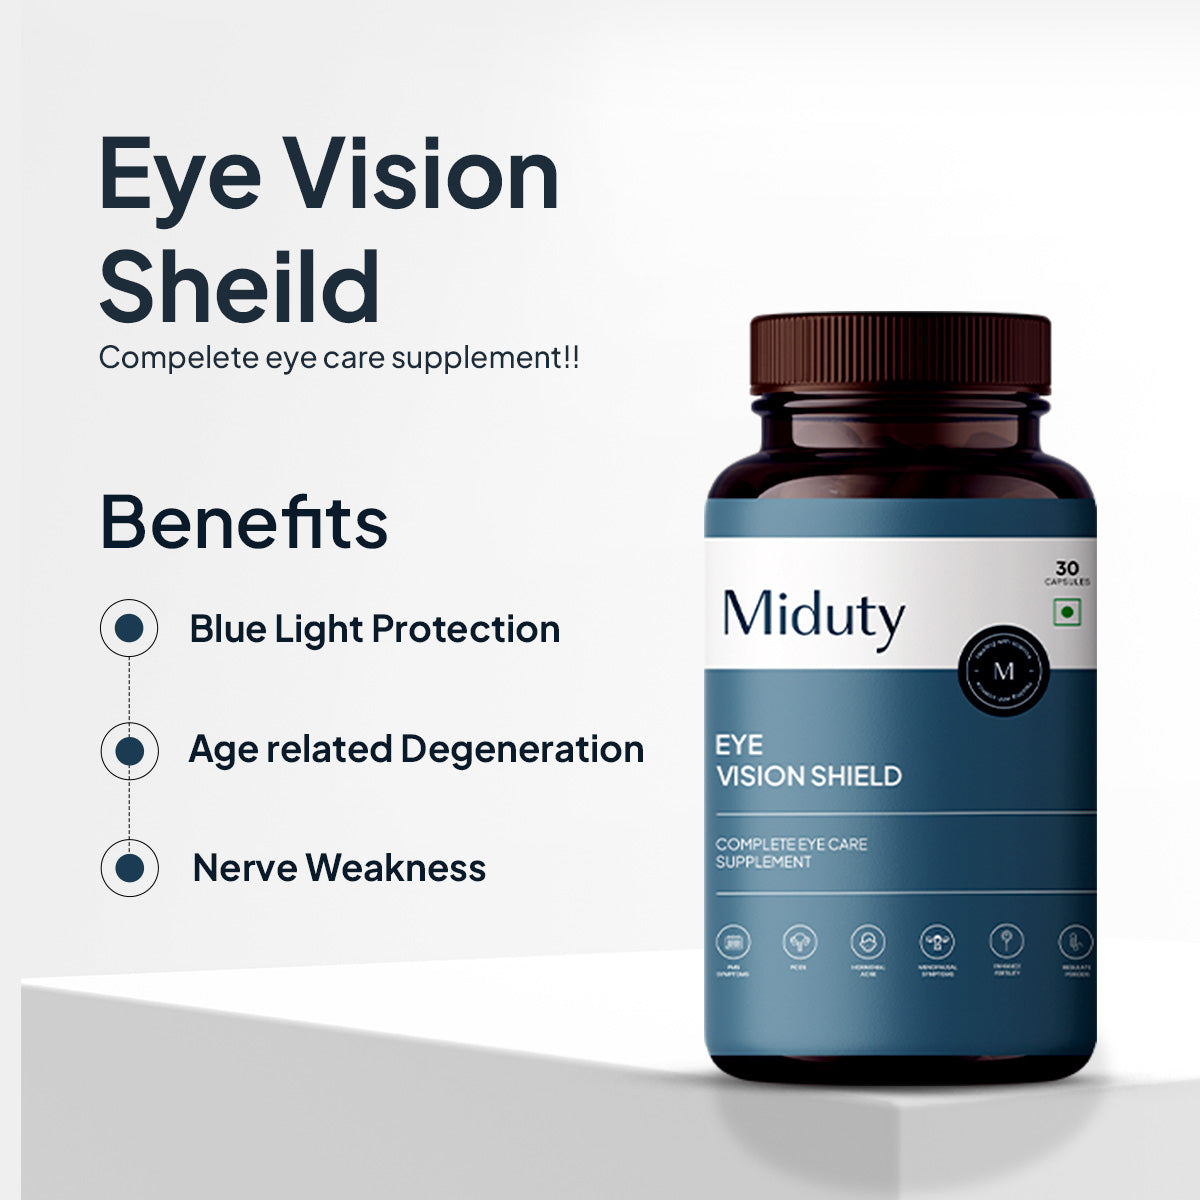 Eye Vision Shield - Miduty